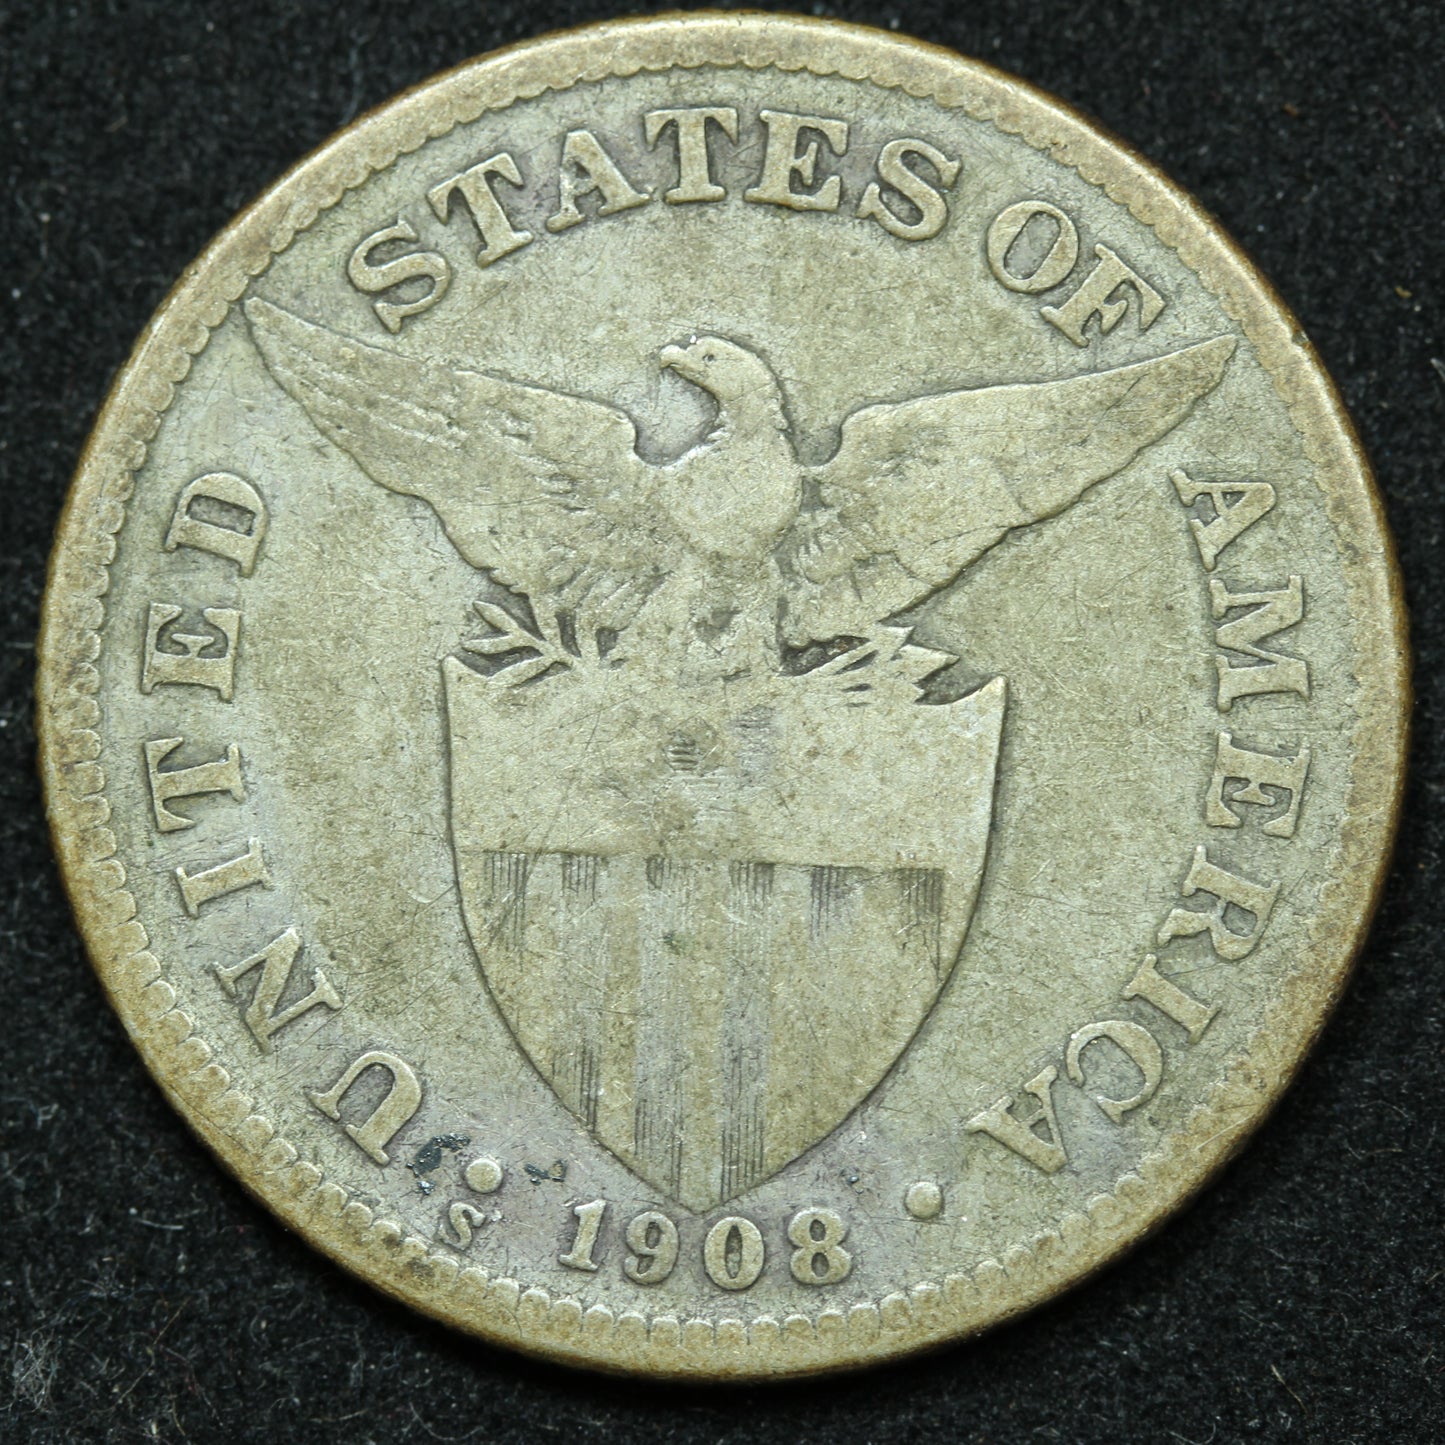 1908 S 50 Centavos Philippines Silver Coin - KM# 171